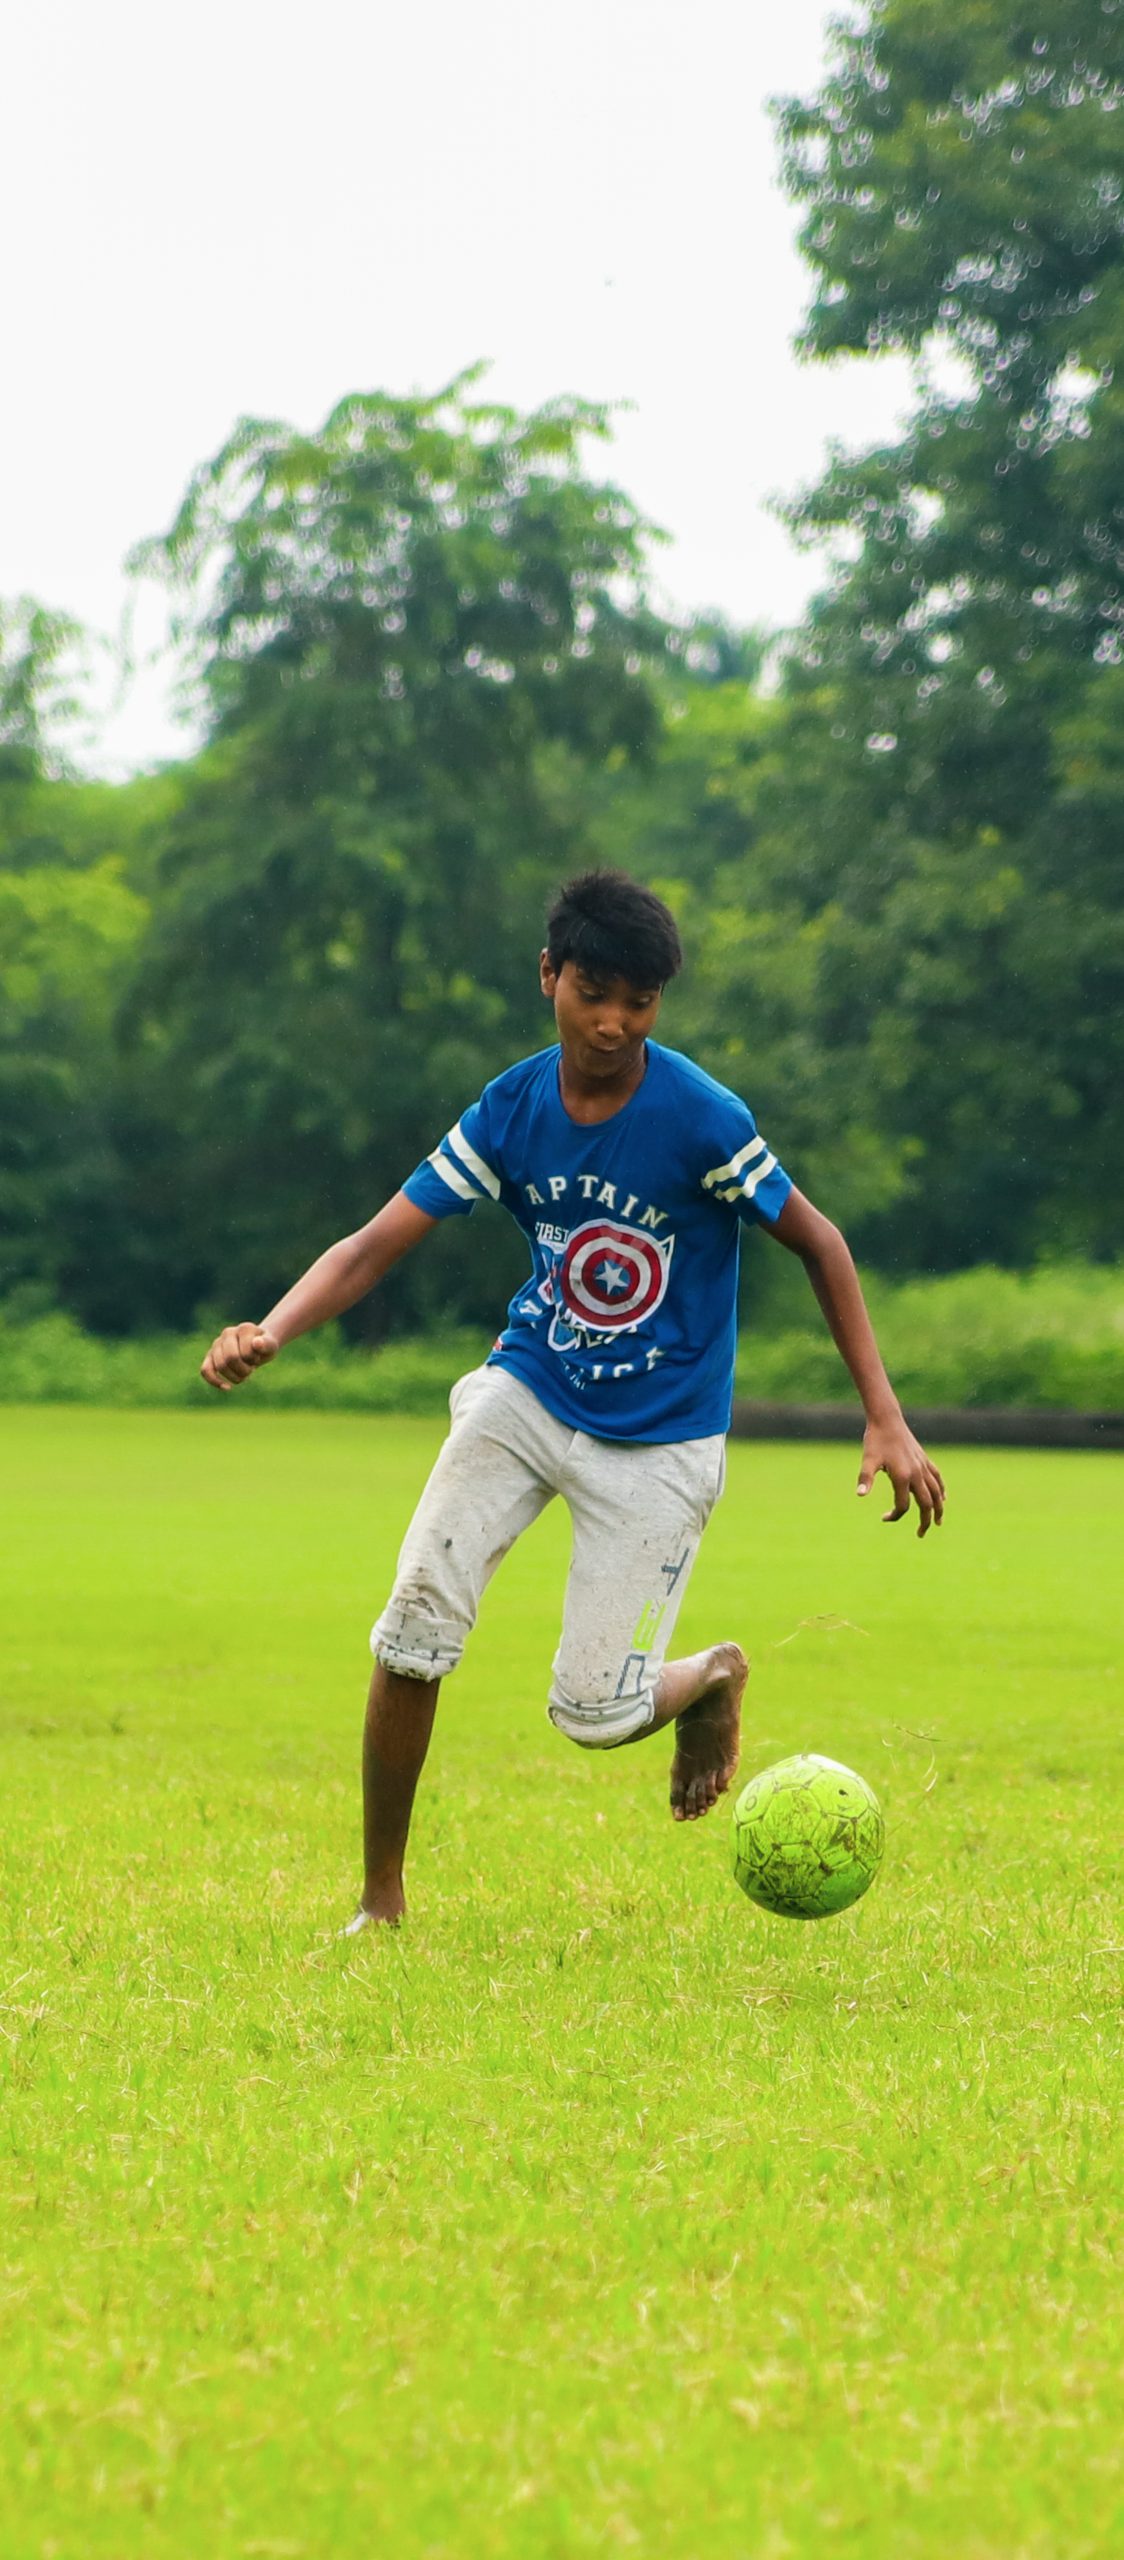 Player playing football